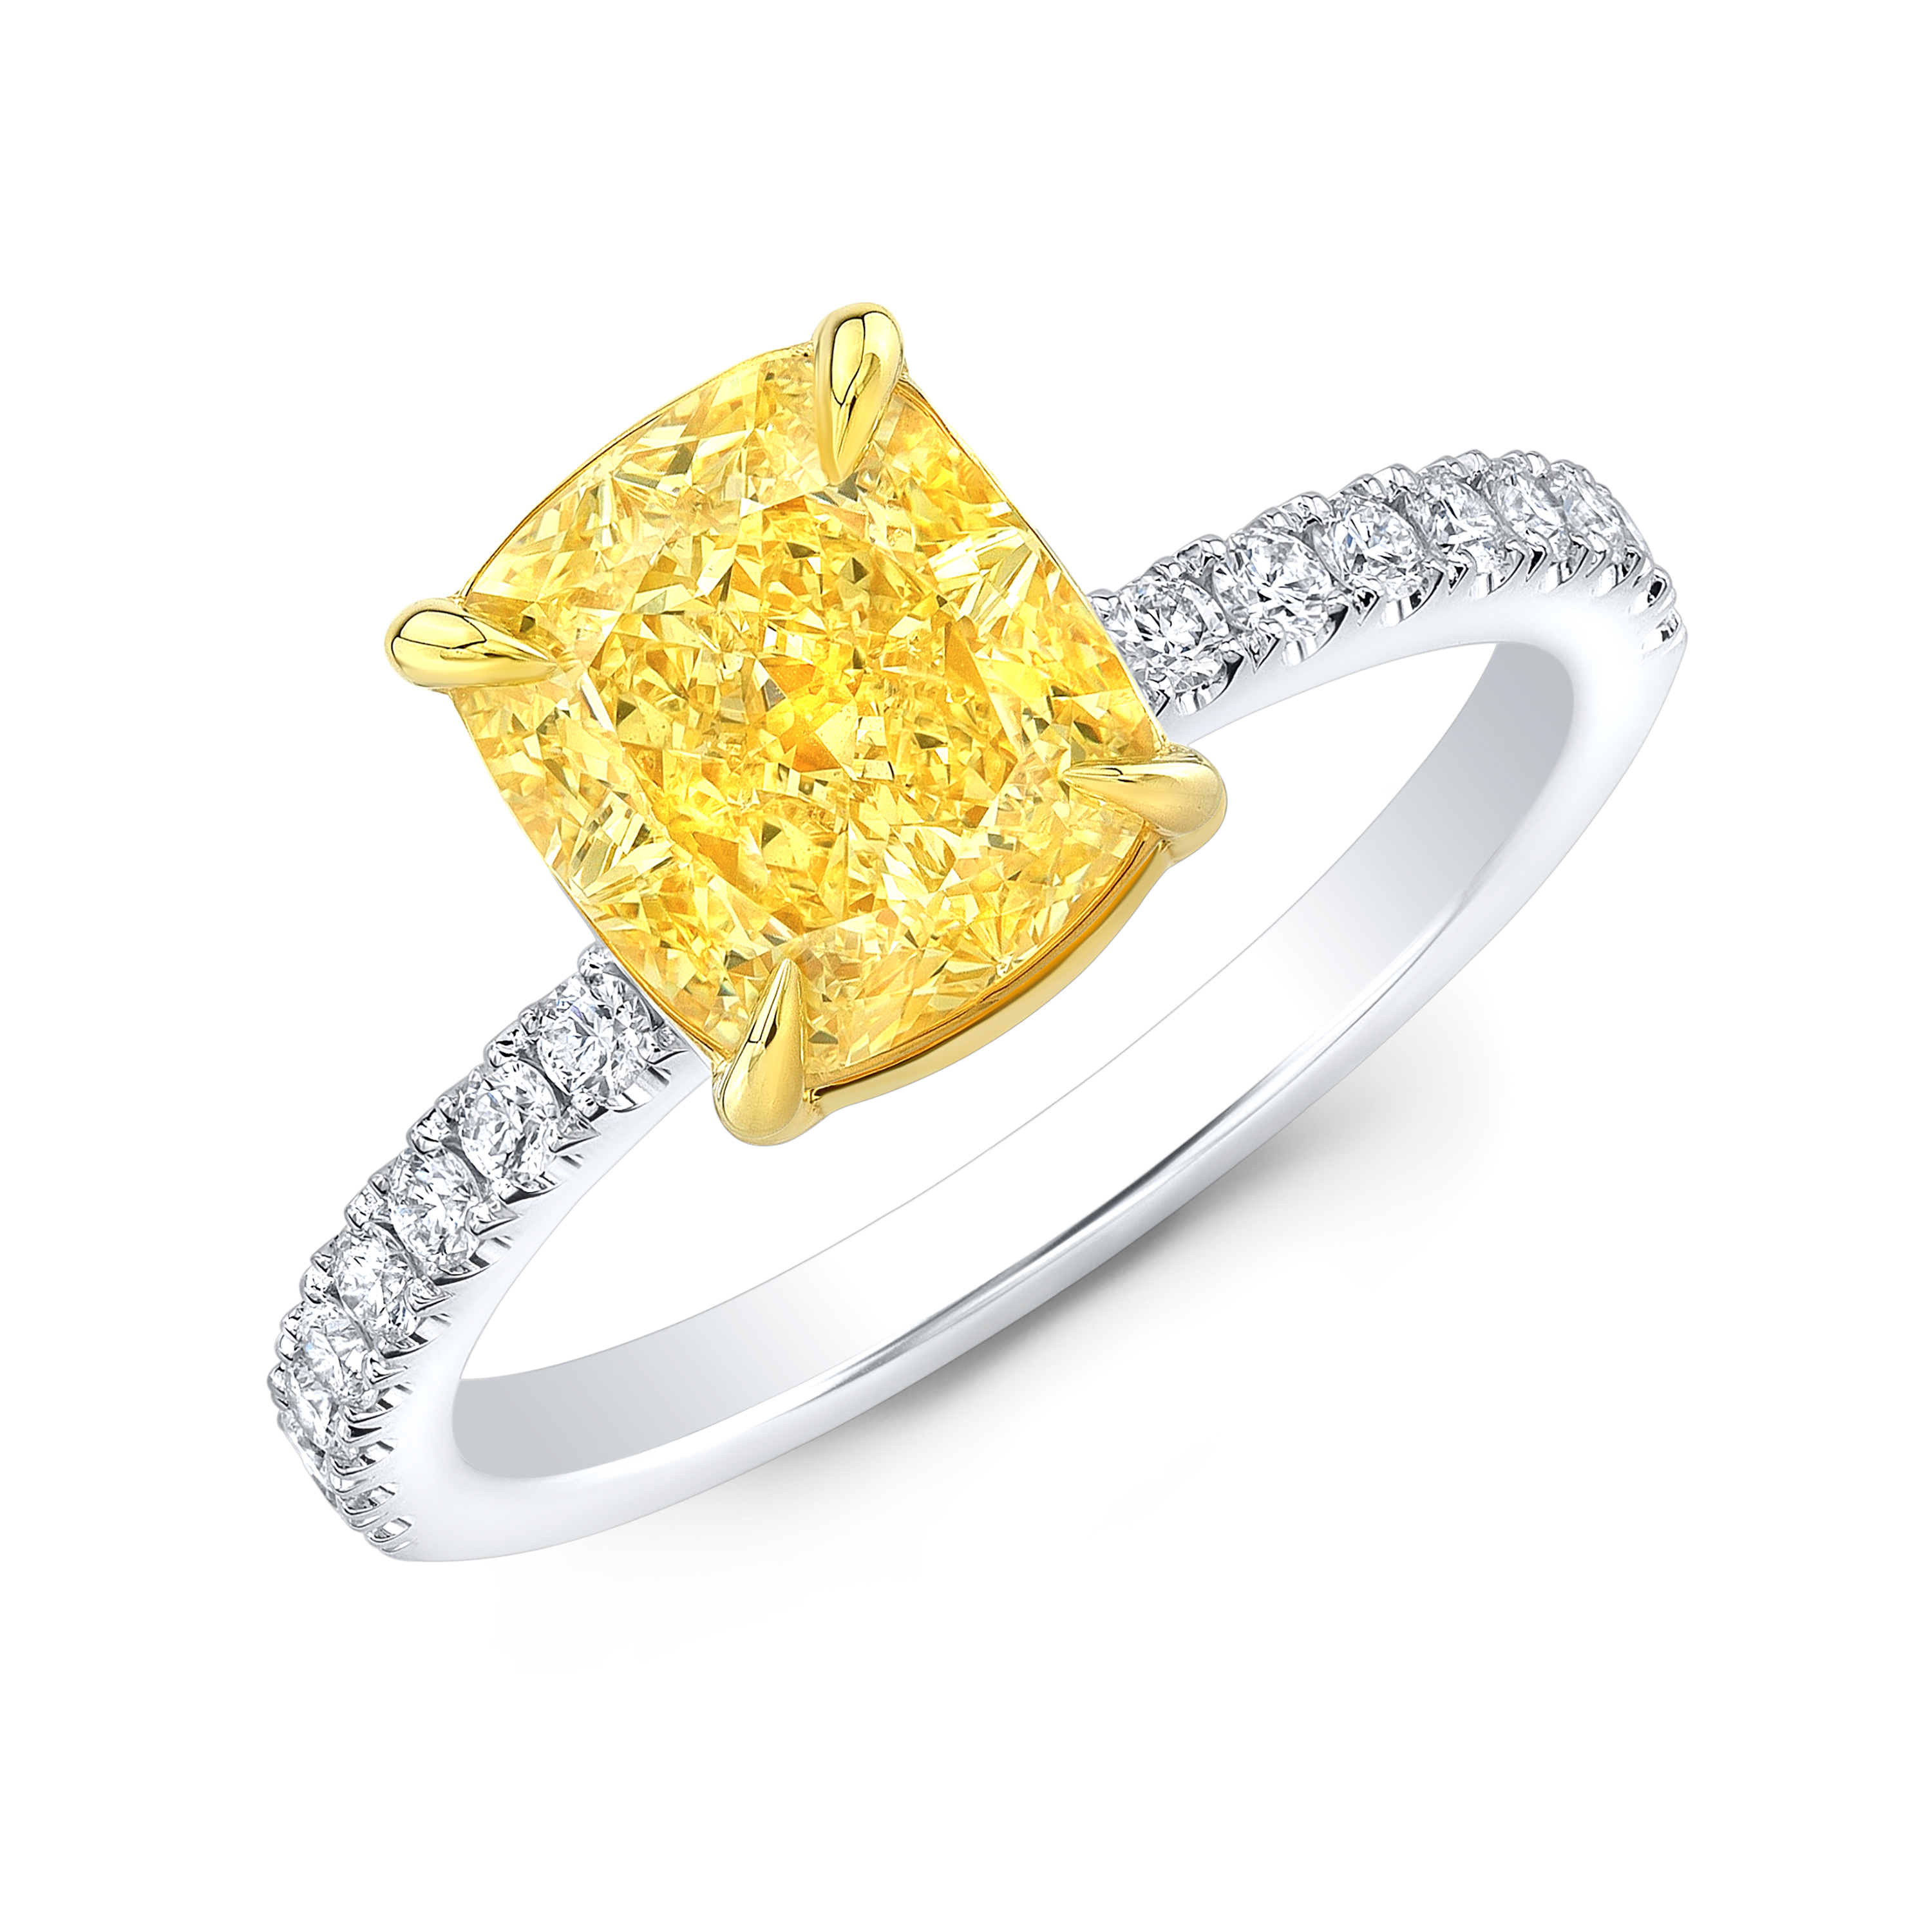 U-Pave Diamond Engagement Ring